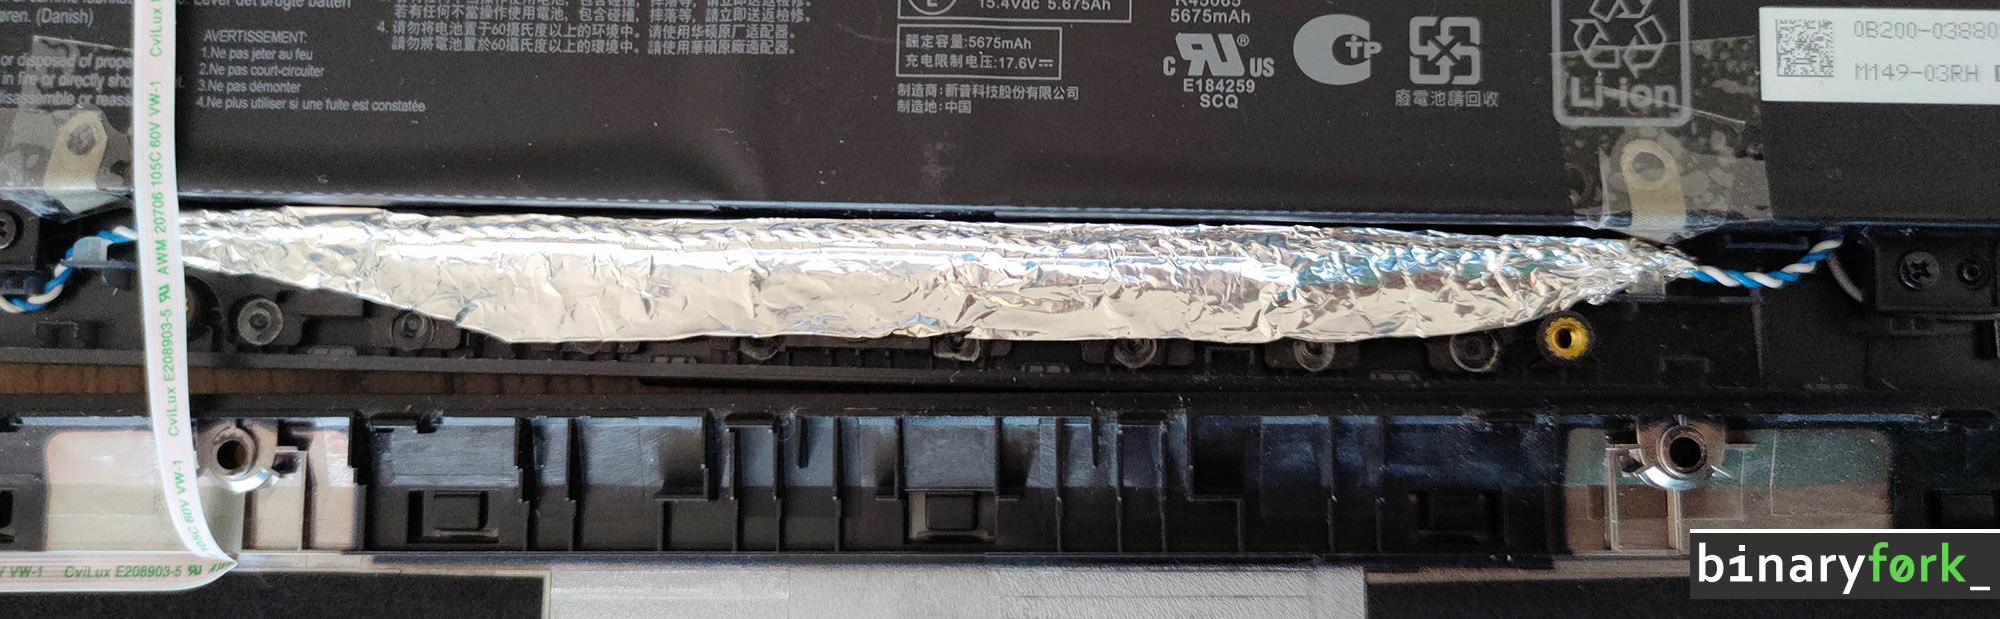 laptop speaker wire tin foil wrapped mod